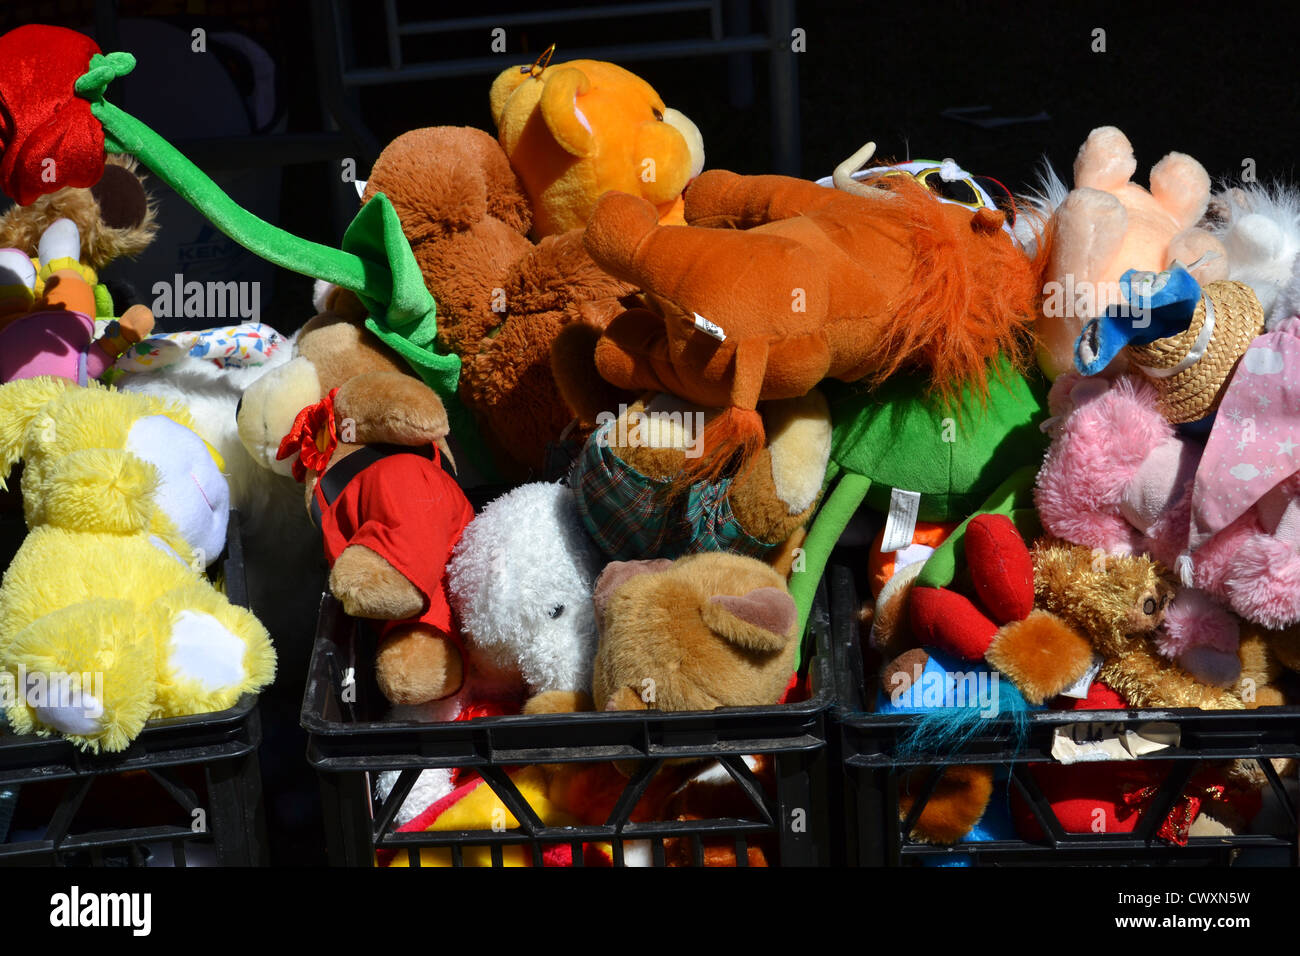 crates full of stuffed animals and plush toys at flea market Stock Photo -  Alamy